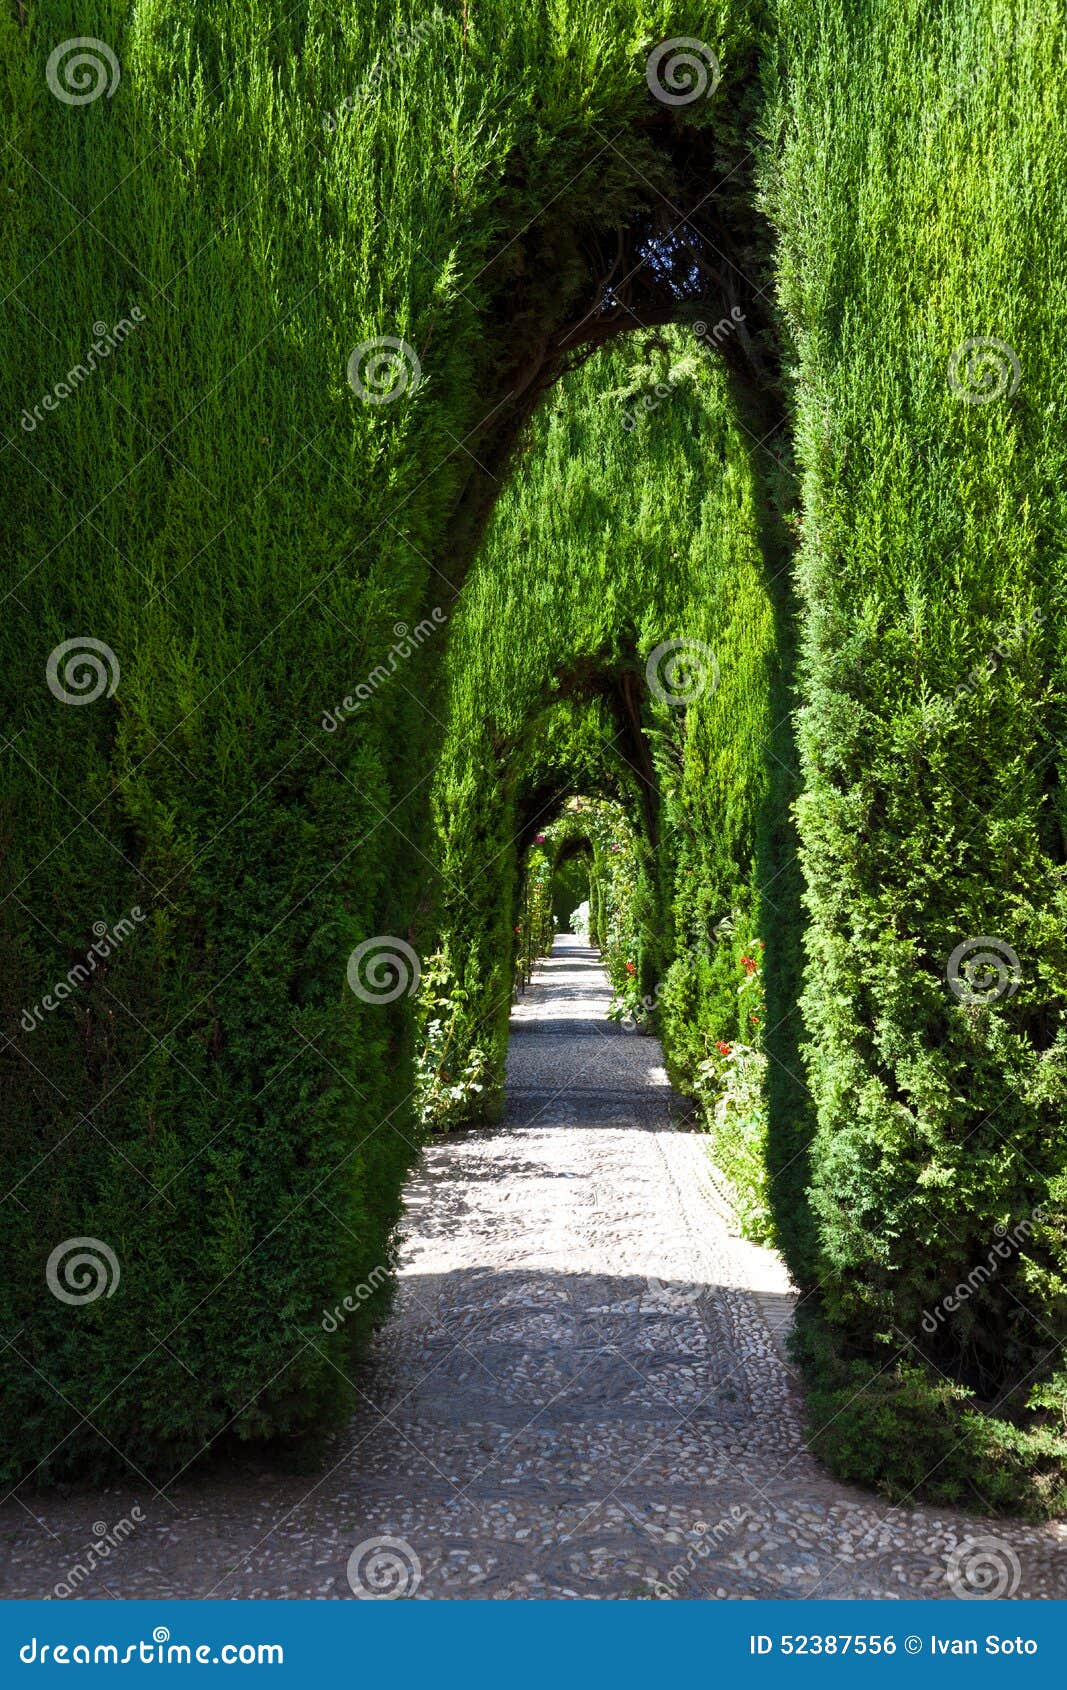 Hedge s tunnel stock photo. Image of garden, generalife - 52387556